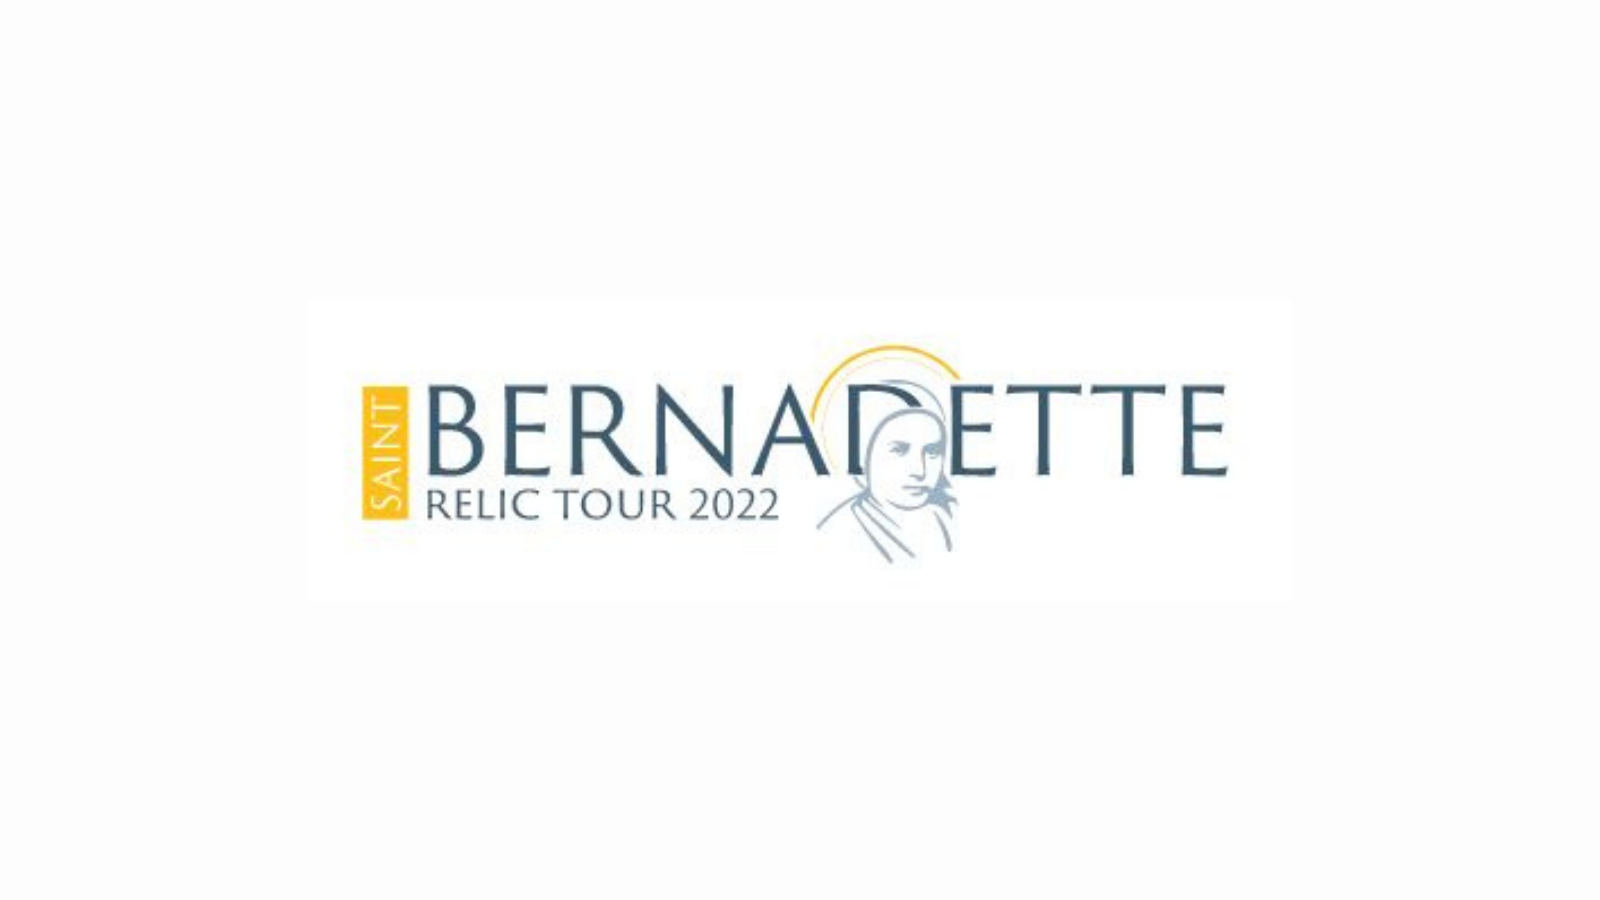 Saint Bernardette